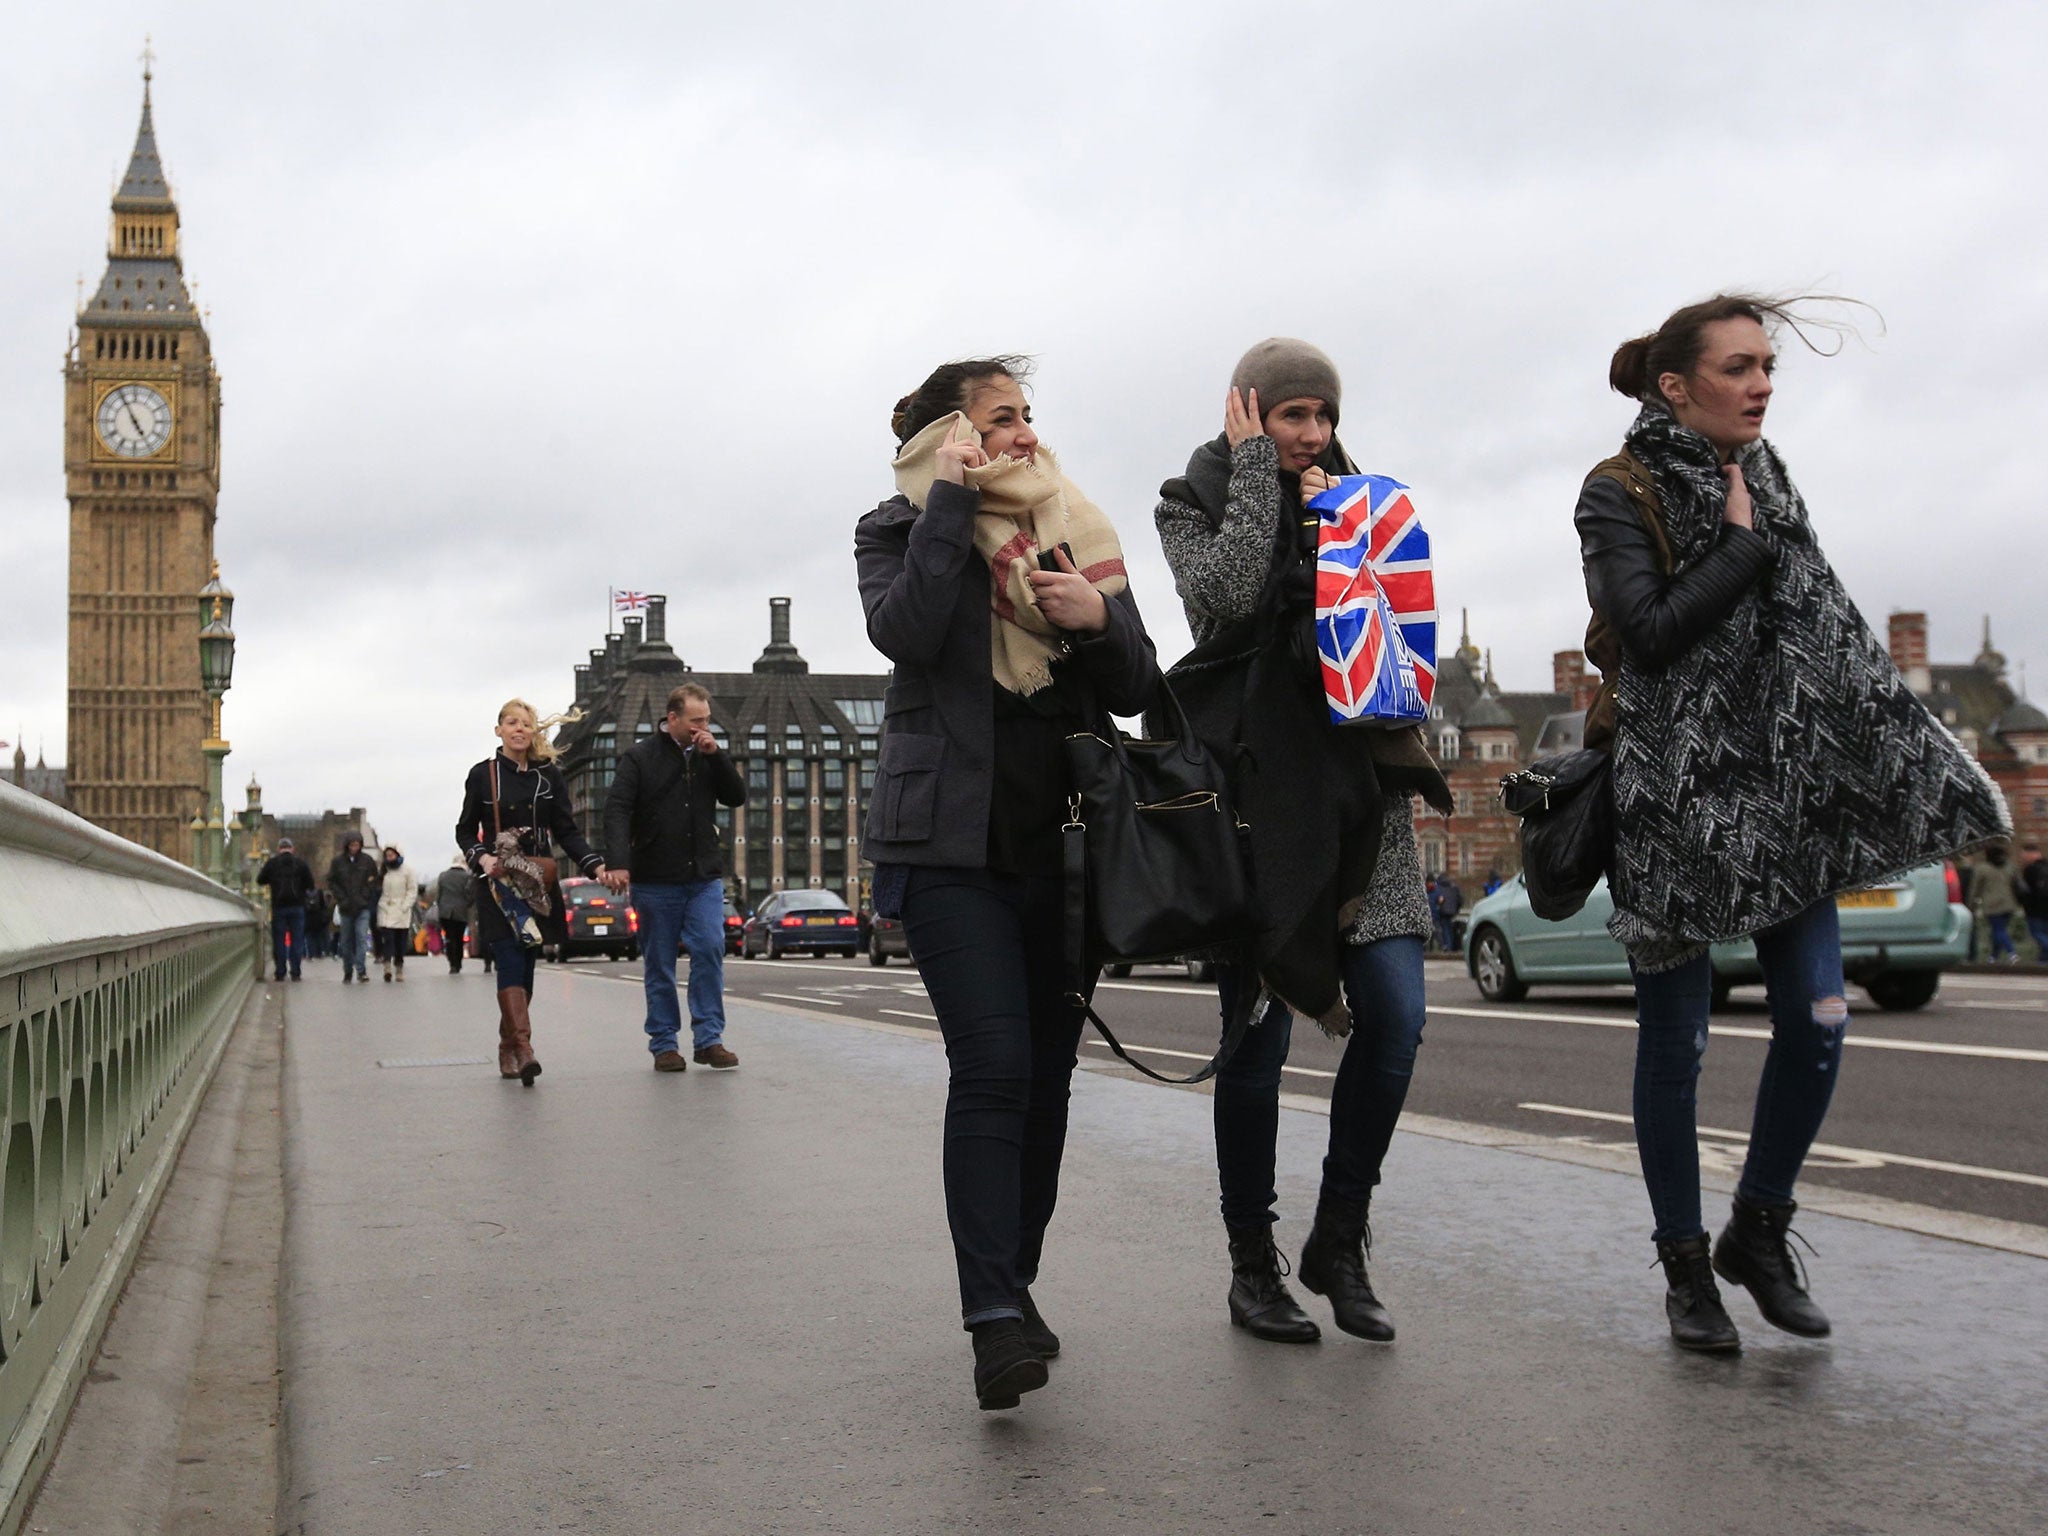 High winds batter tourists on London's Westminster Bridge